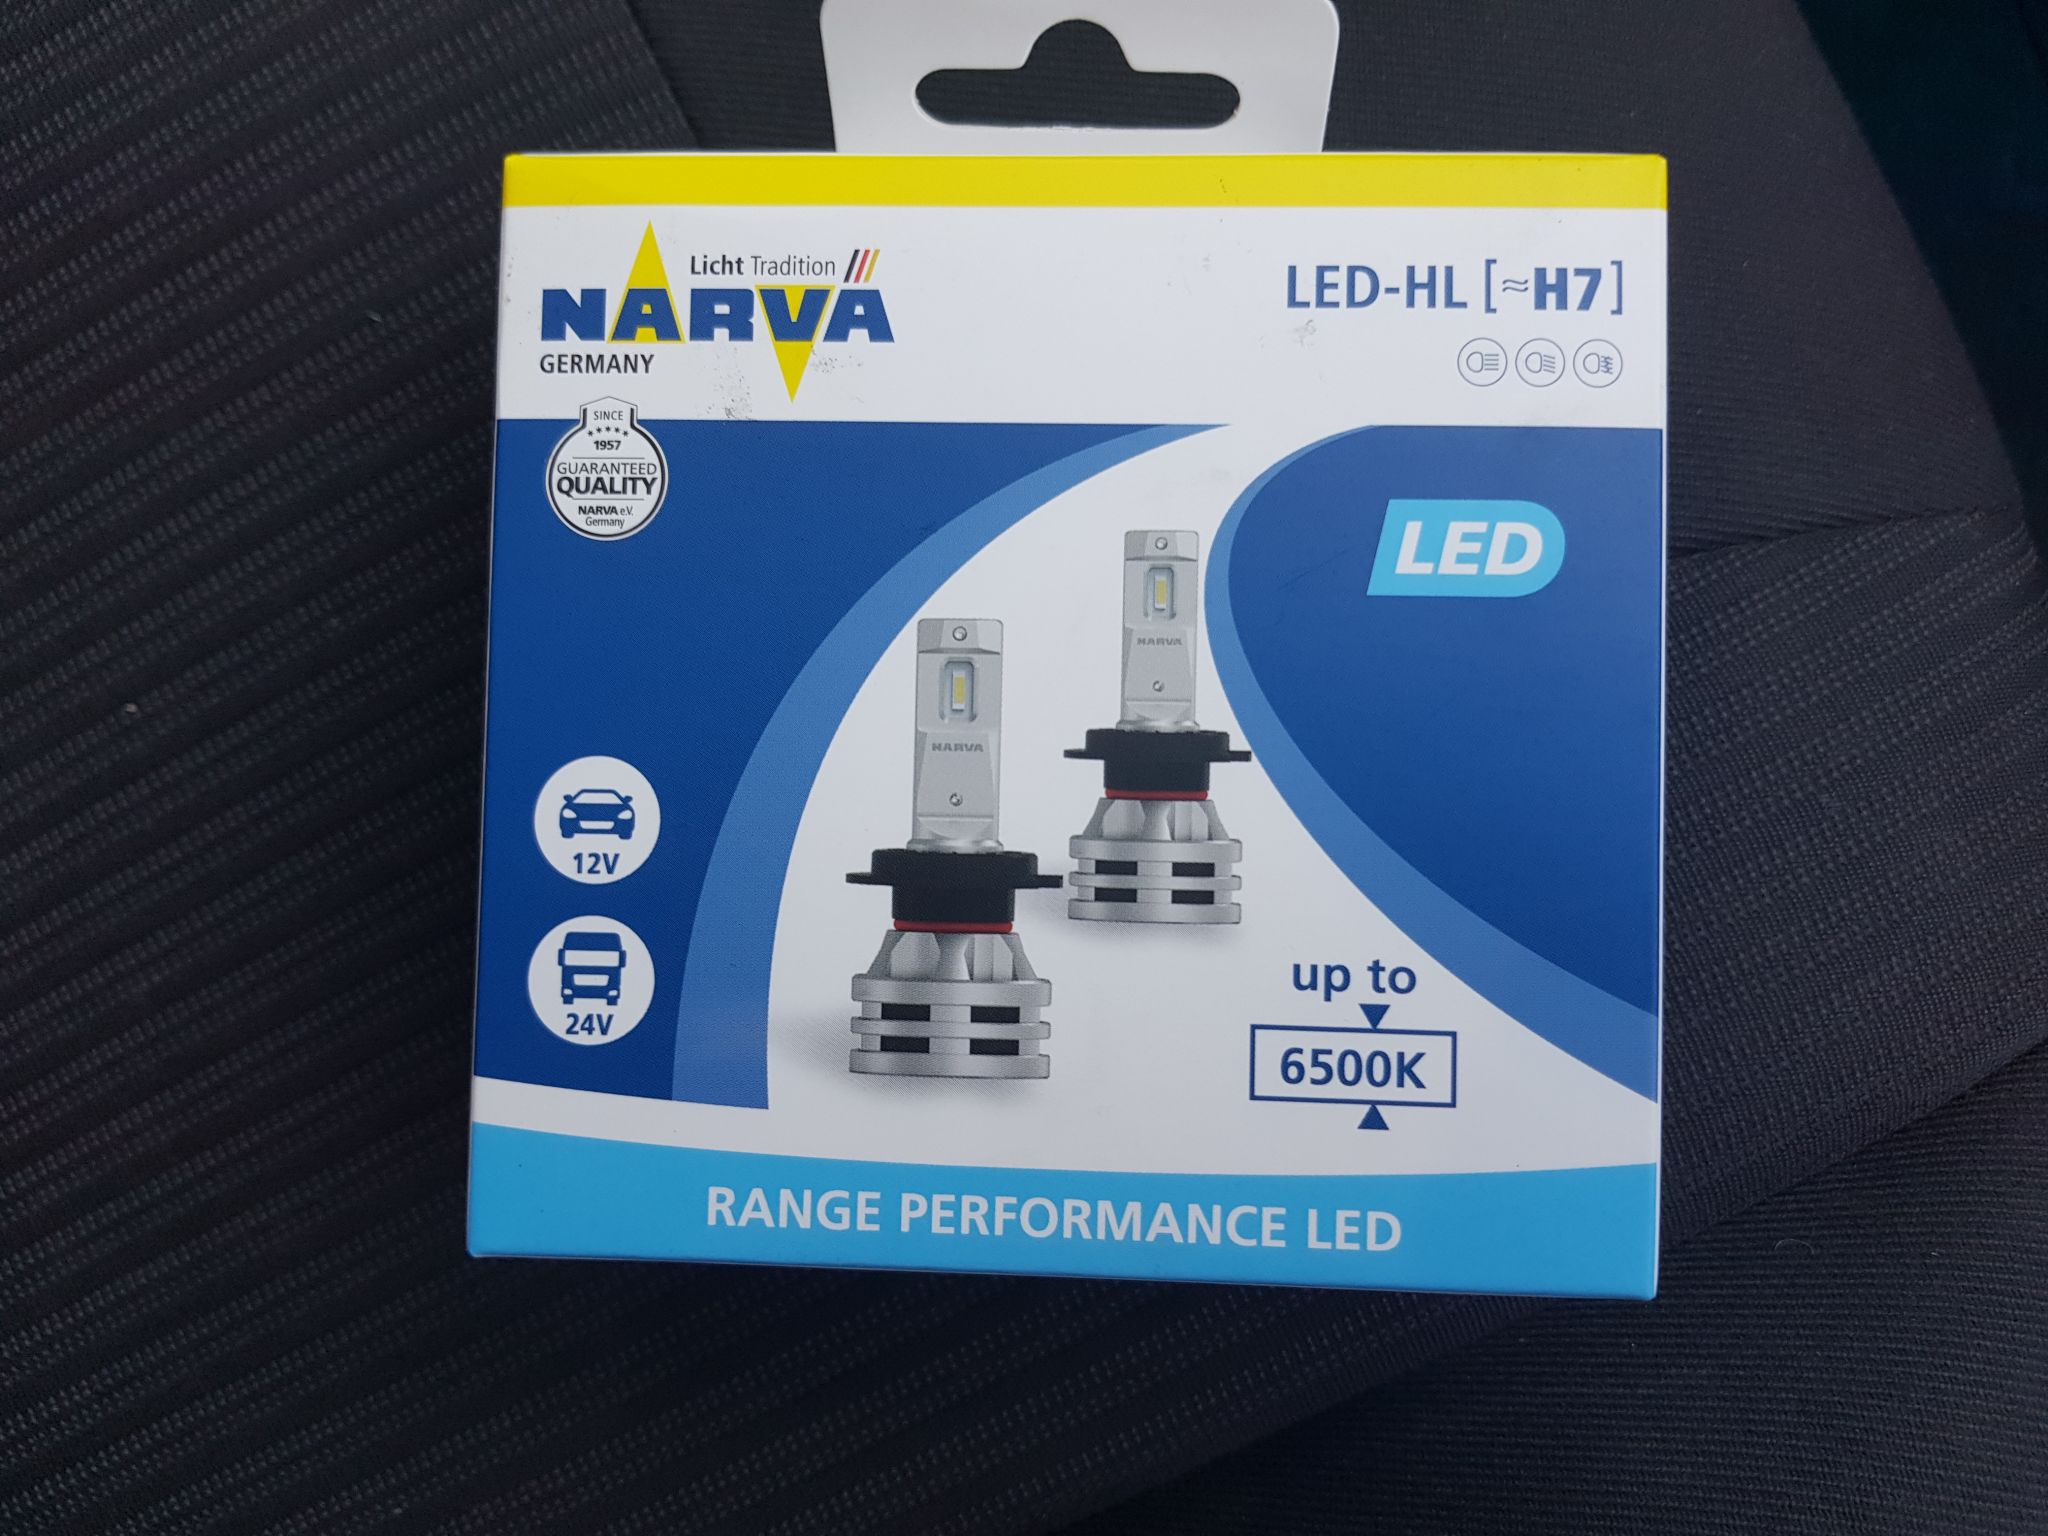 Narva performance. Светодиодная лампа h7 Narva range Performance led 6500k. 18033 Narva h7. Narva 18033 led h7 6500k. Лампа светодиодная "Narva" h7 range Performance led 6500k (18033) (2 шт.) (Германия).